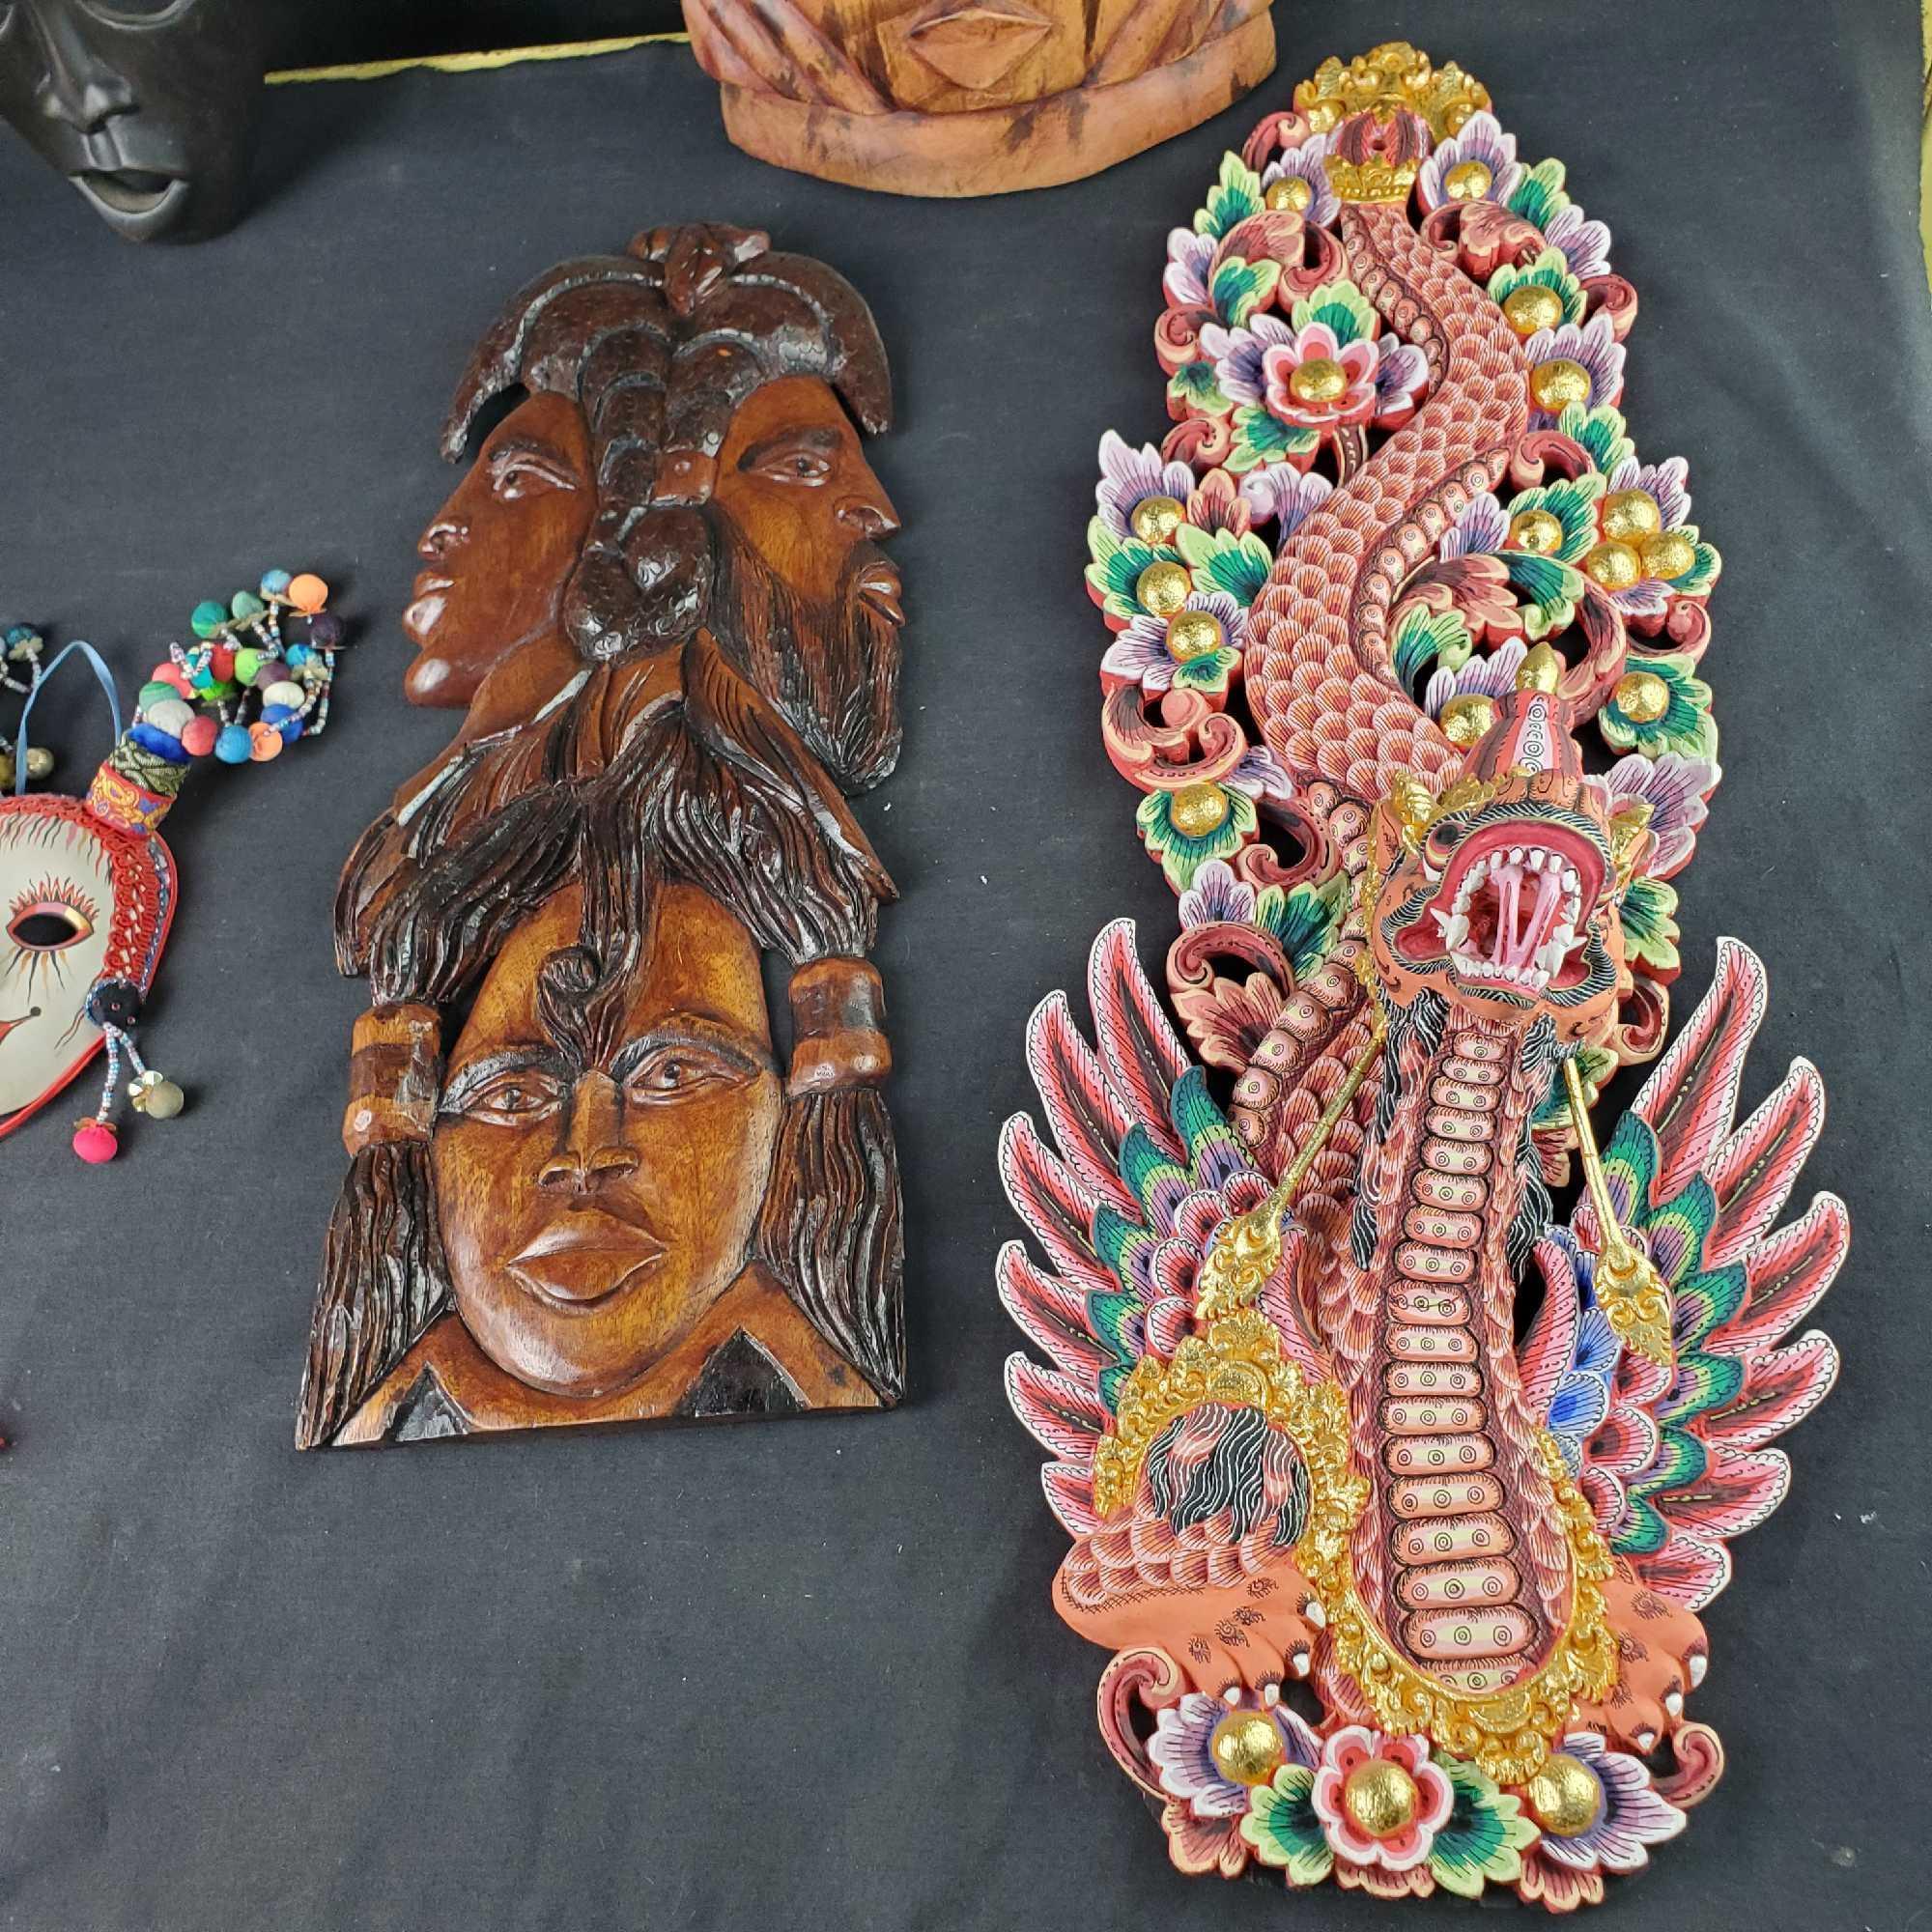 3 unique wooden masks 1 ceramic 2 decorative wall art pieces